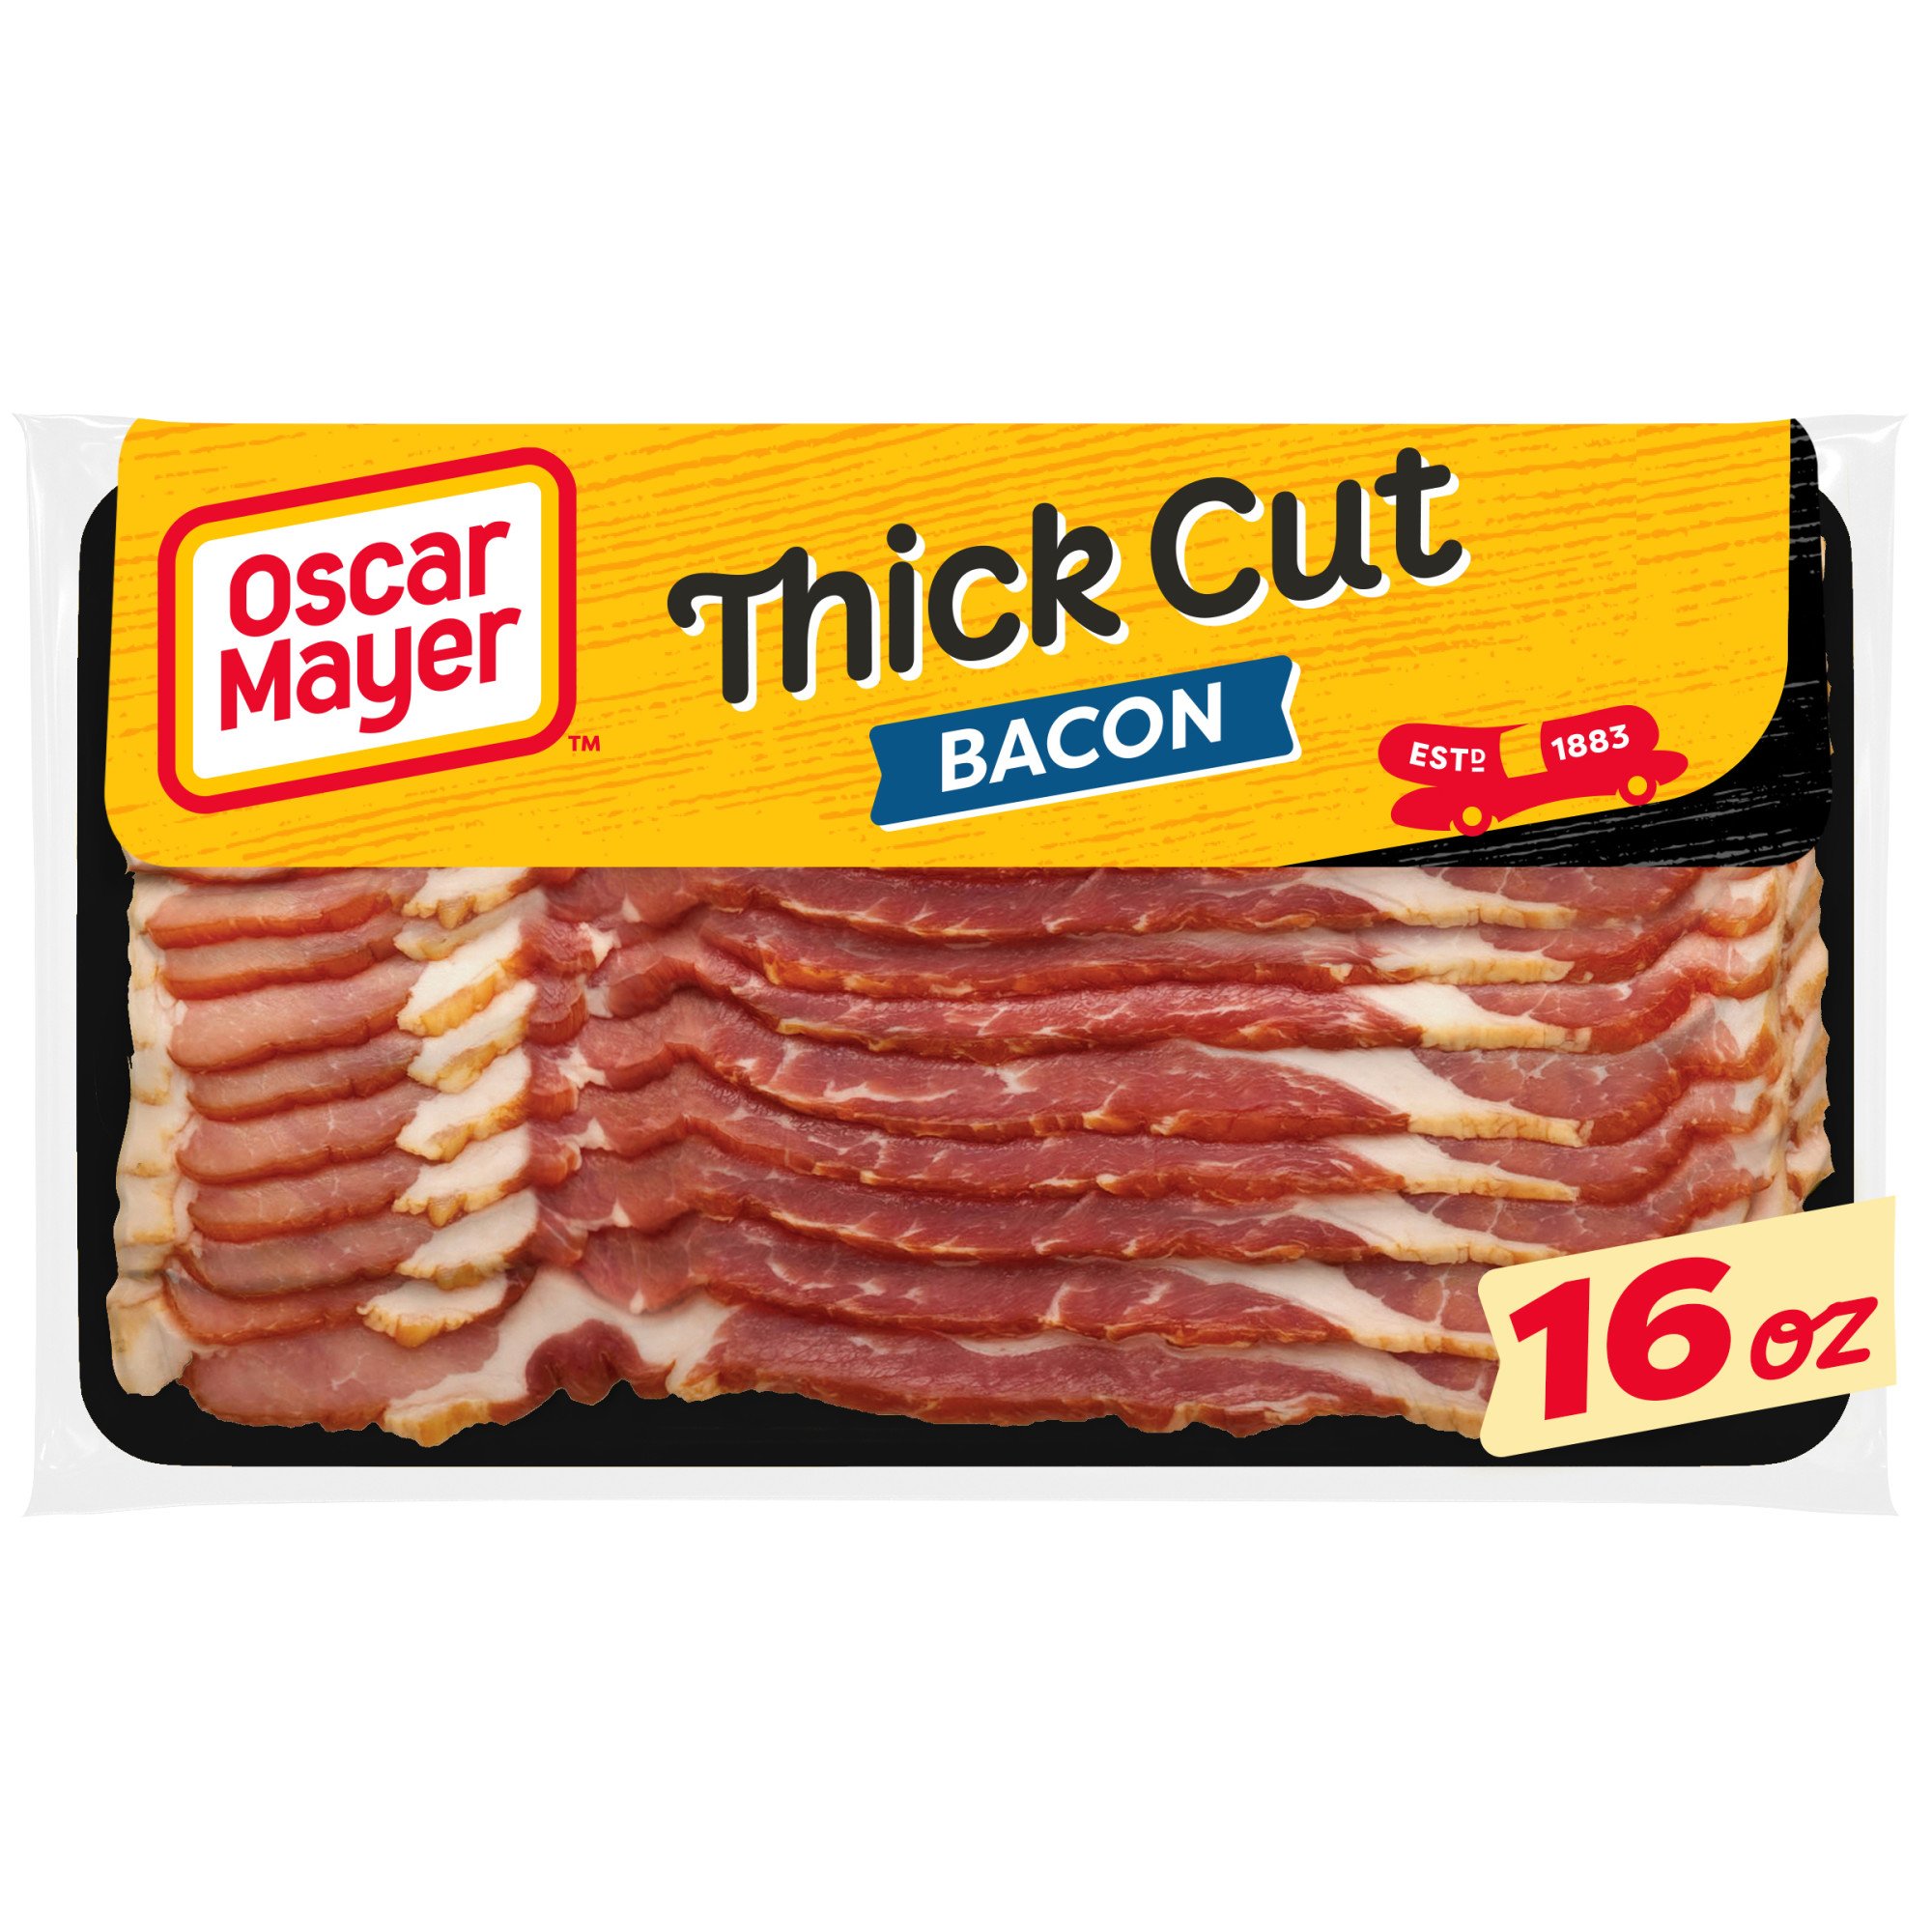 Oscar Mayer Naturally Hardwood Smoked Thick Cut Bacon